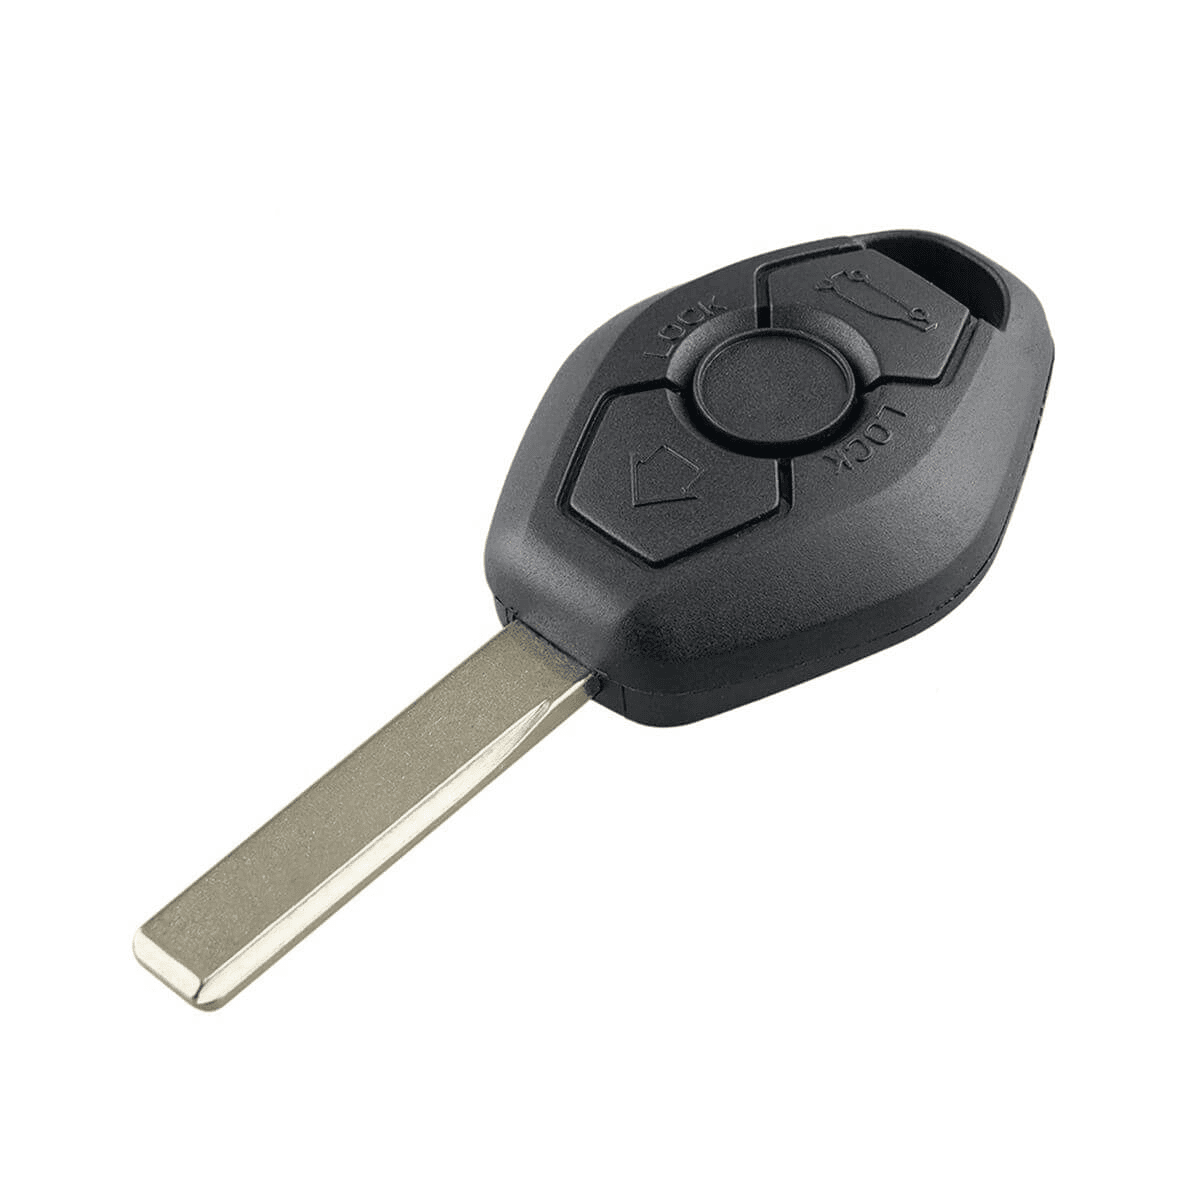 Selected image for CAR ACESSORIES 888 Kućište auto ključa sa 3 tastera HU92 za BMW A01-AP000